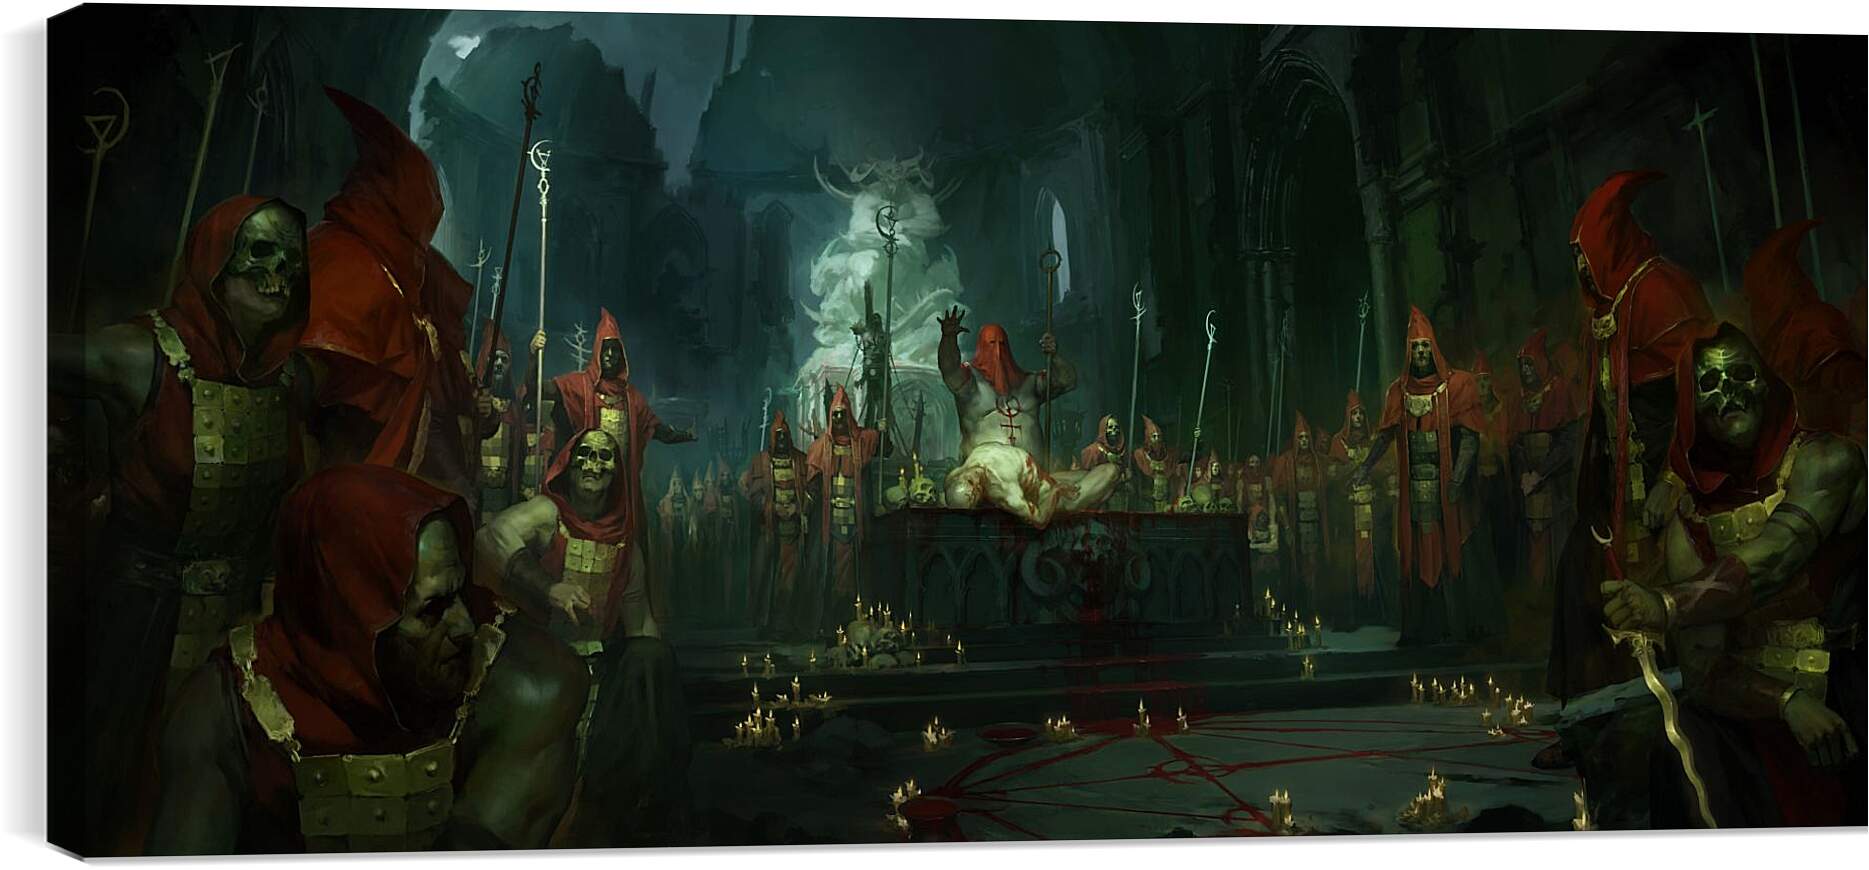 Постер и плакат - Diablo IV